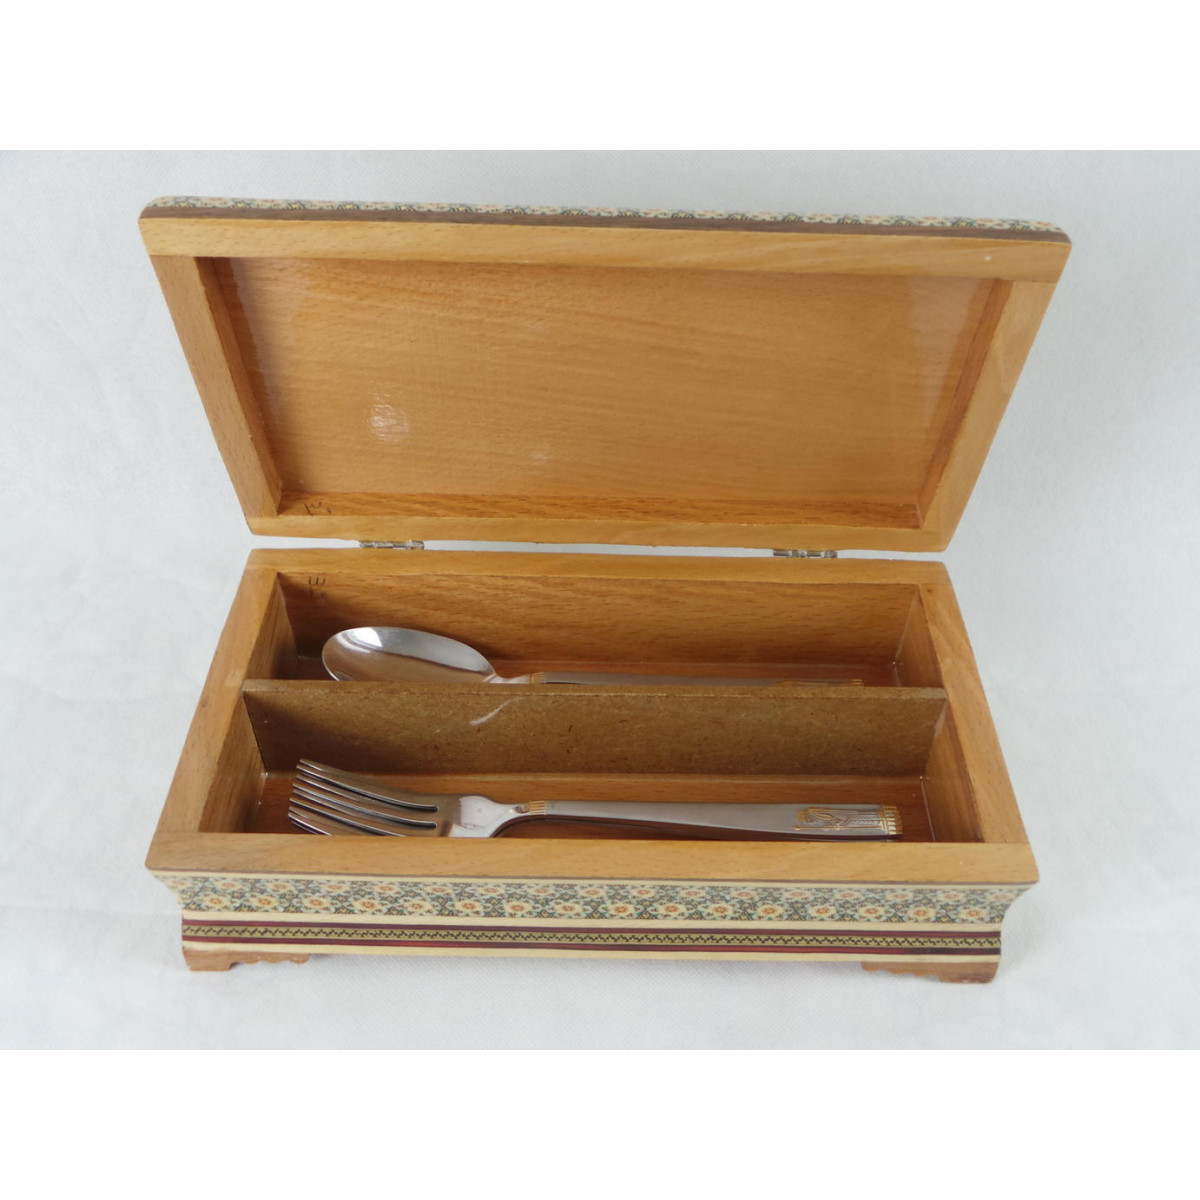 Persian Khatam Handicrafts Cutlery Box - HKH3000-Persian Handicrafts